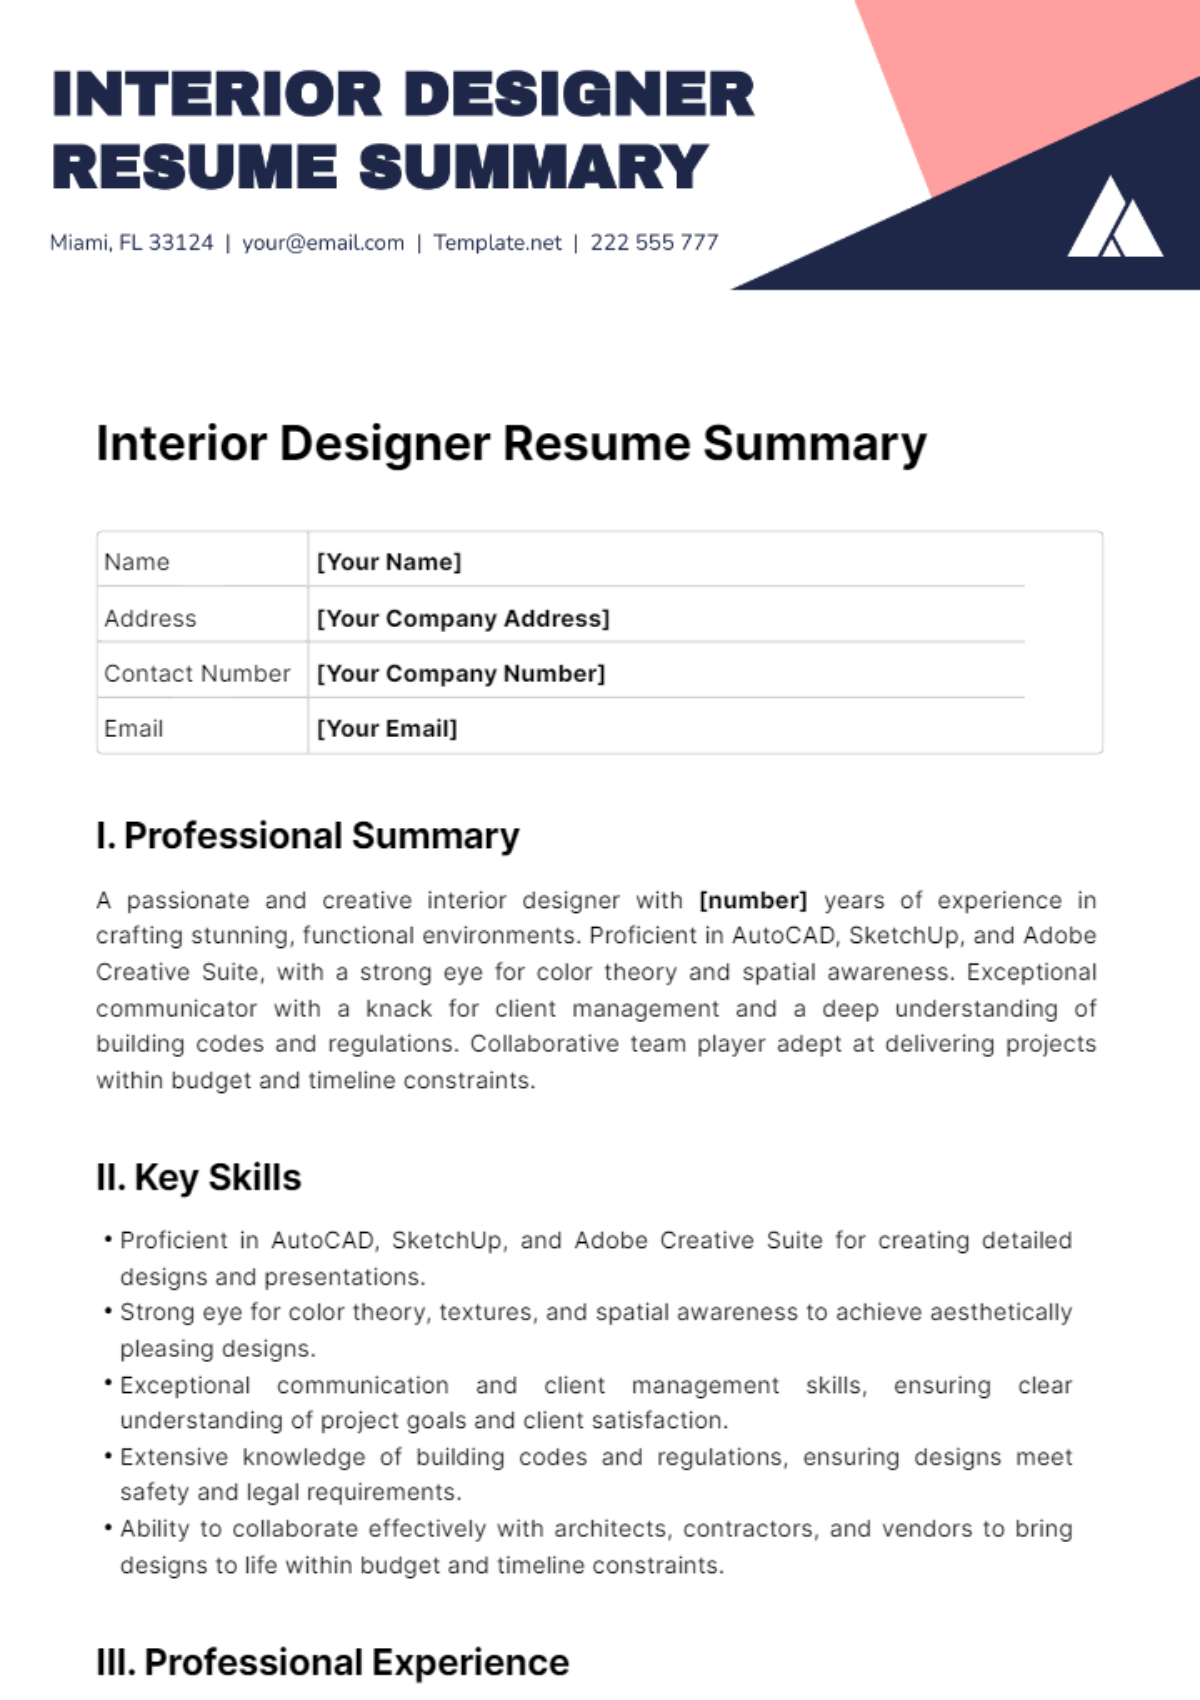 Interior Designer Resume Summary Template